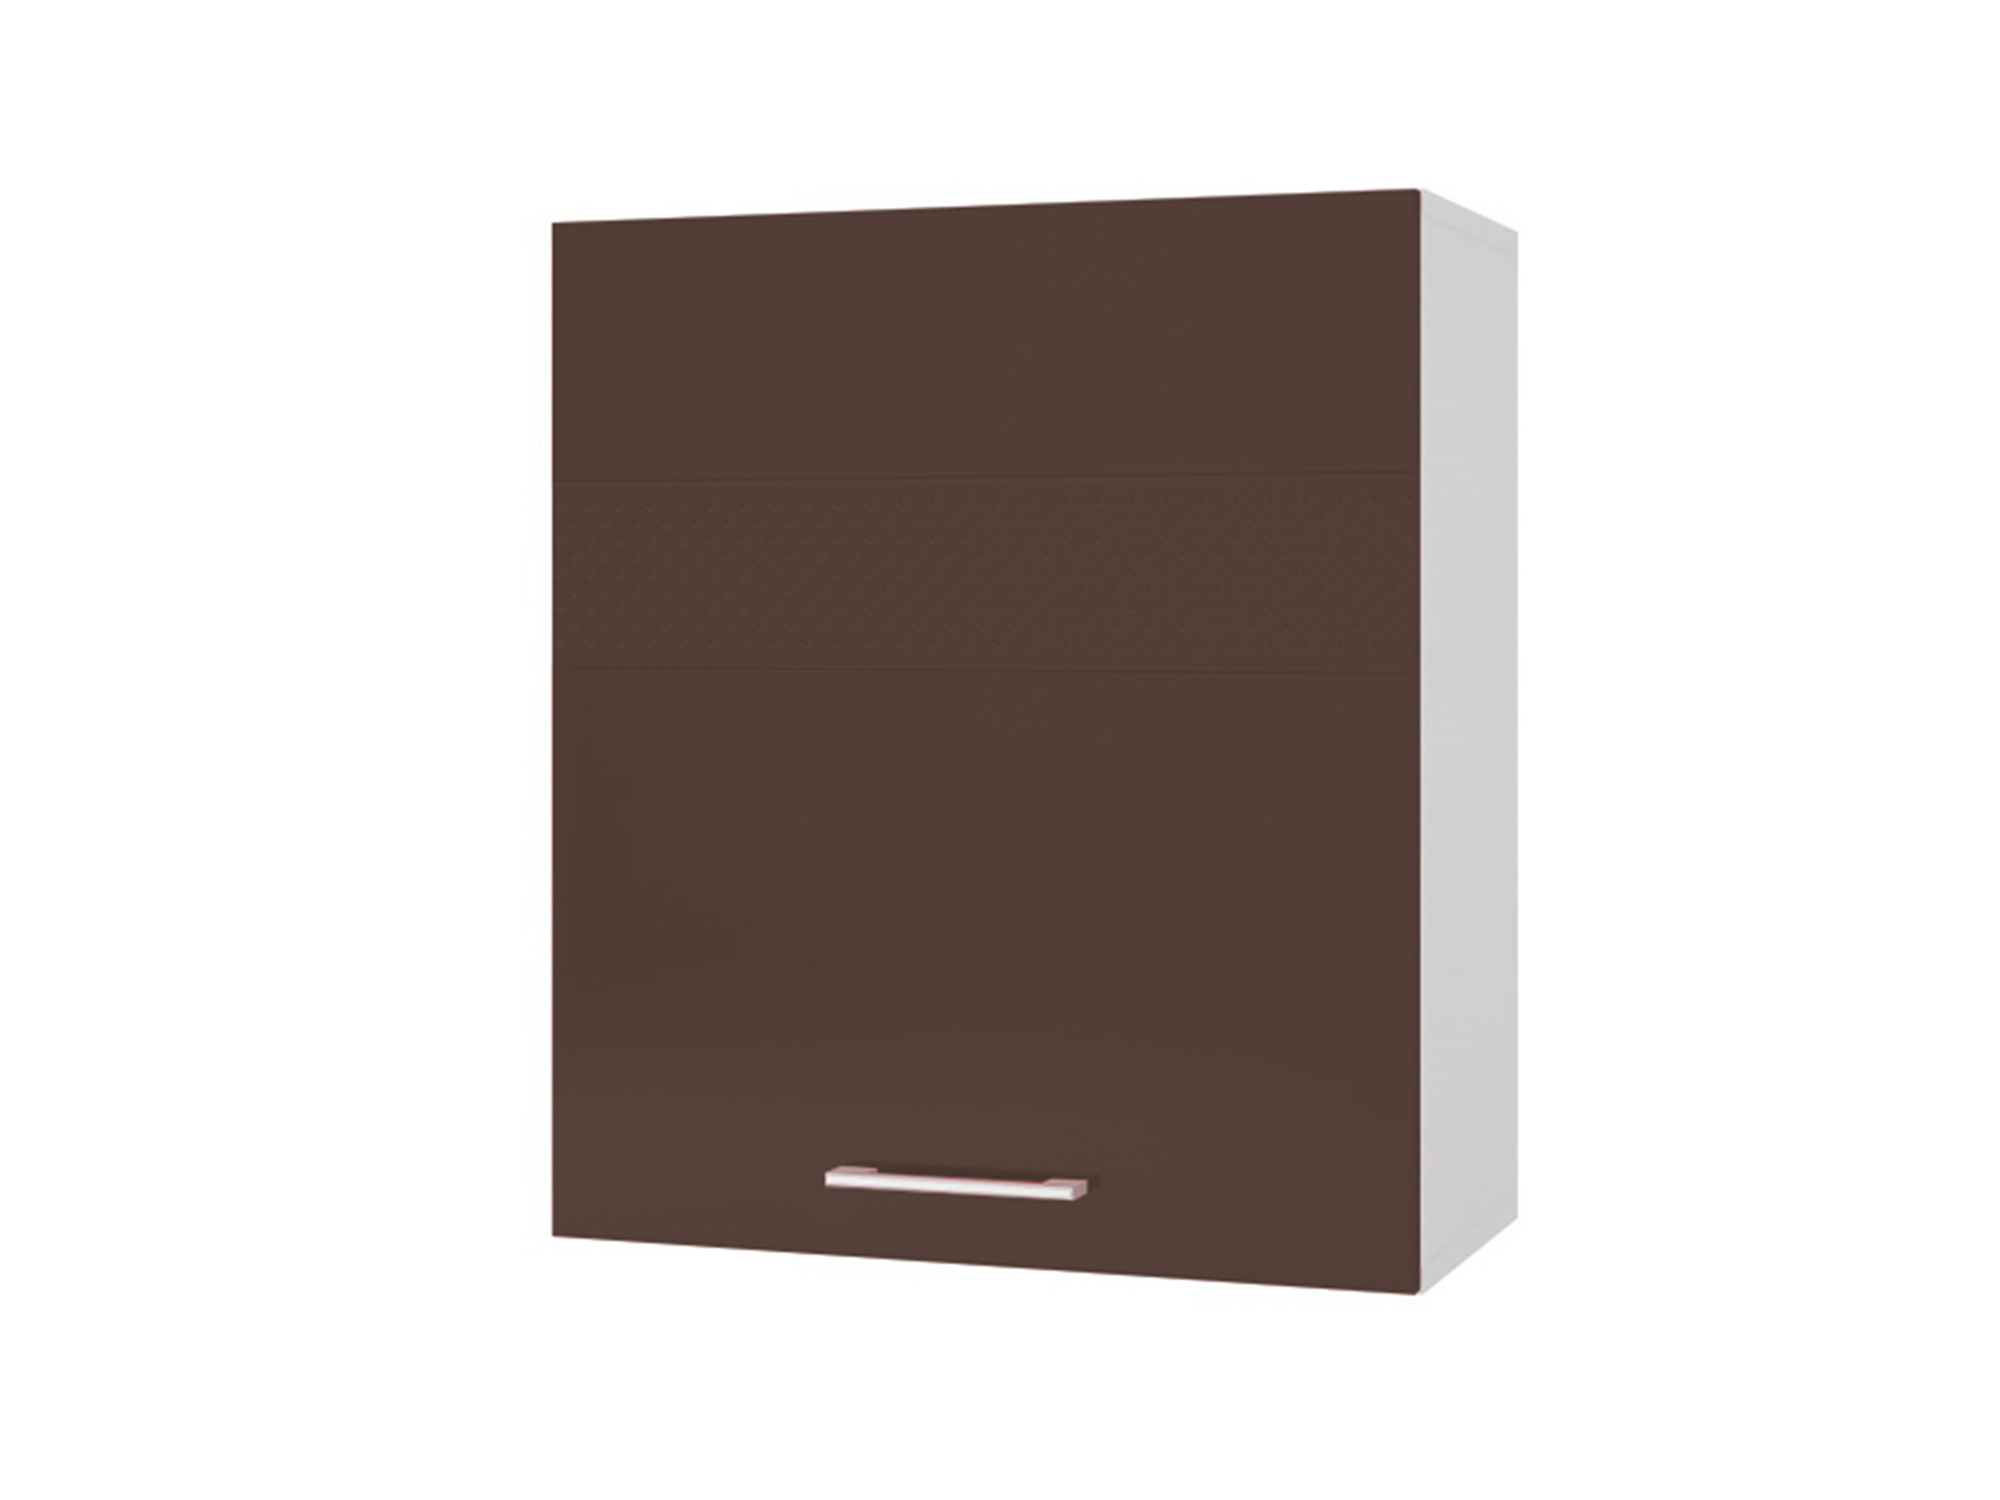 шкаф для одежды berlin шоколад глянец коричневый темный бежевый мдф лдсп Шкаф навесной 60 Люкс Шоколад глянец, , Коричневый темный, Белый, МДФ, ПВХ, ЛДСП